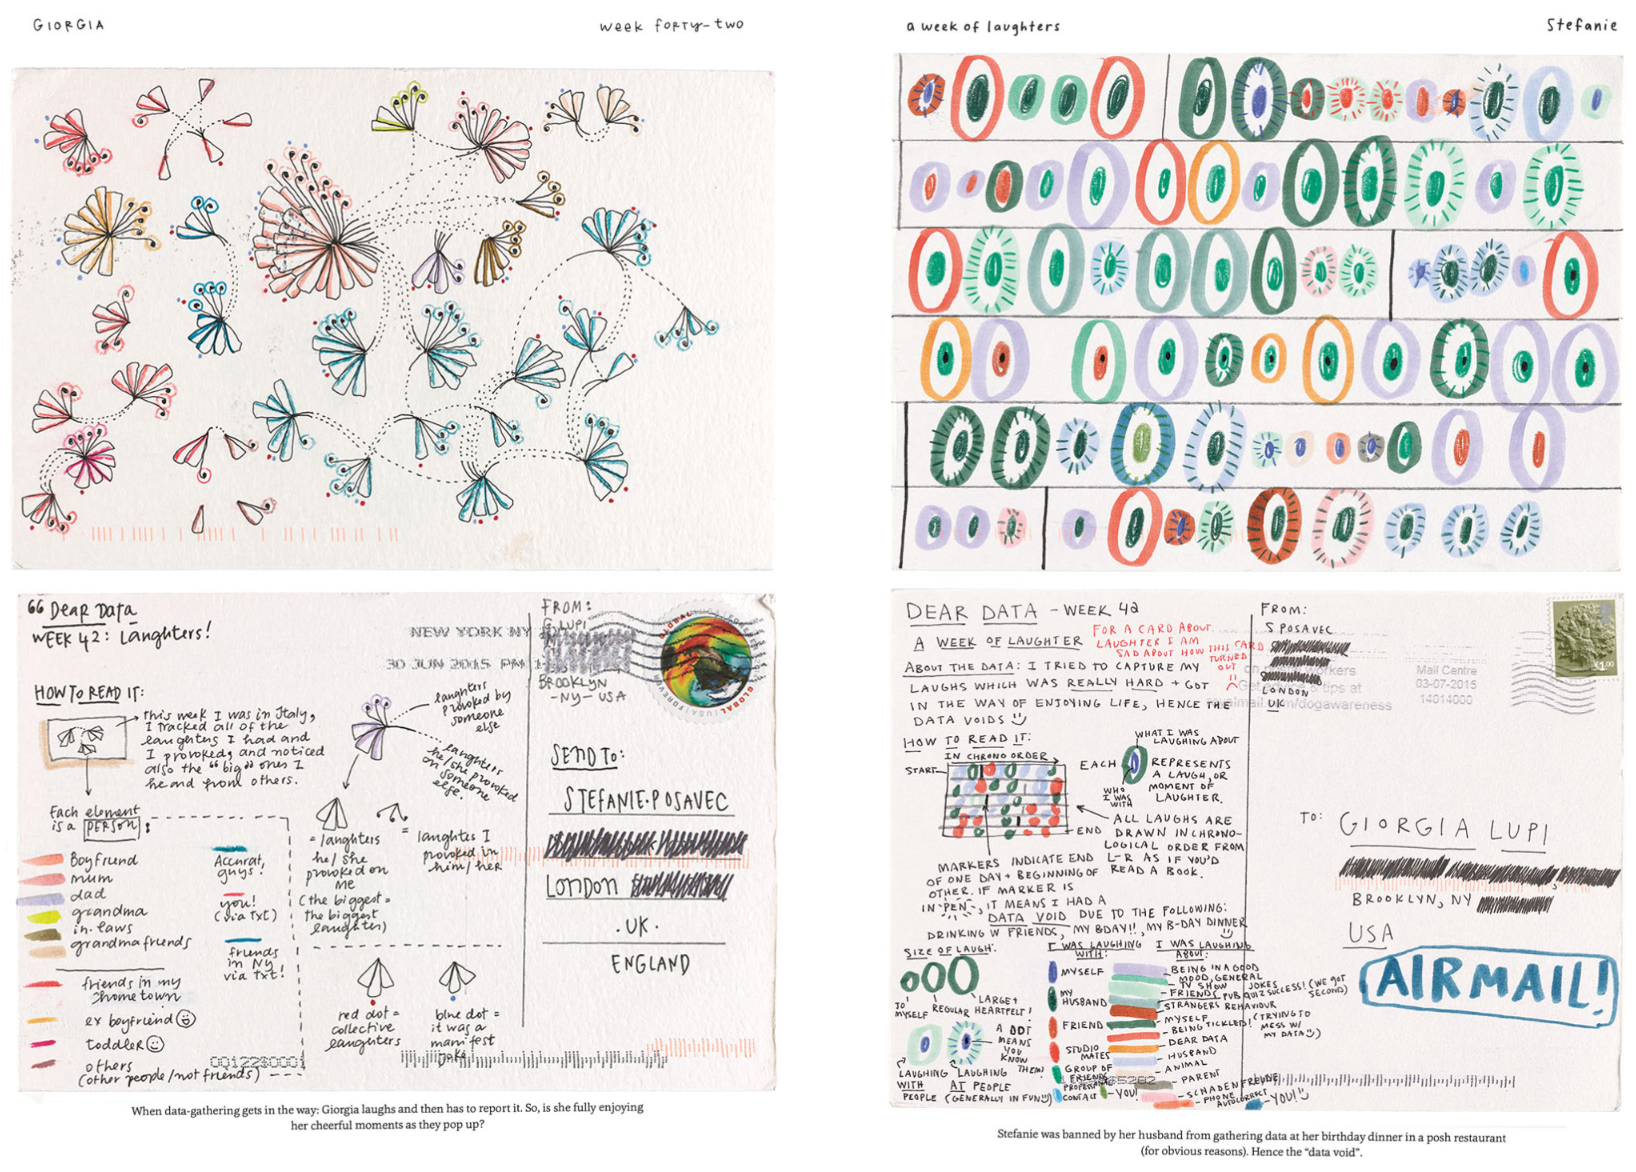 Postcards from Dear Data by Giorgia Lupi and Stefanie Posavec.